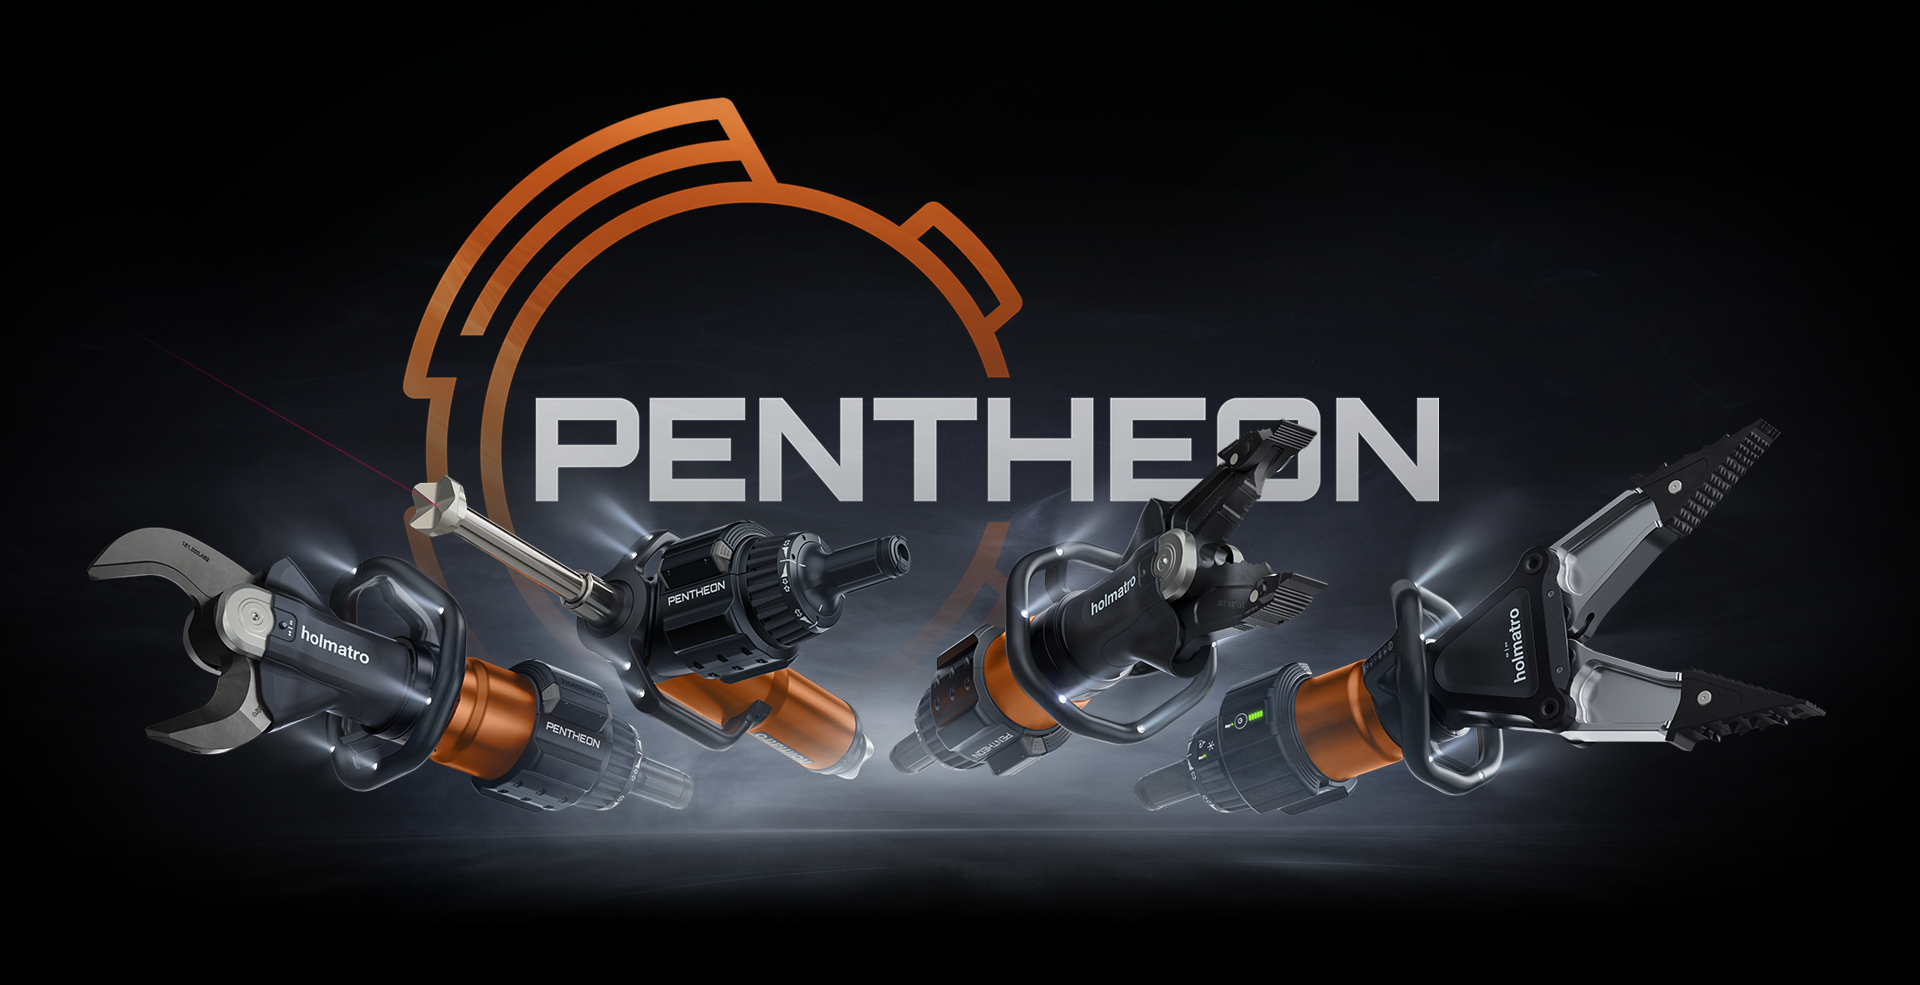 Holmatro Rescue Tools - The New Superior Pentheon Series